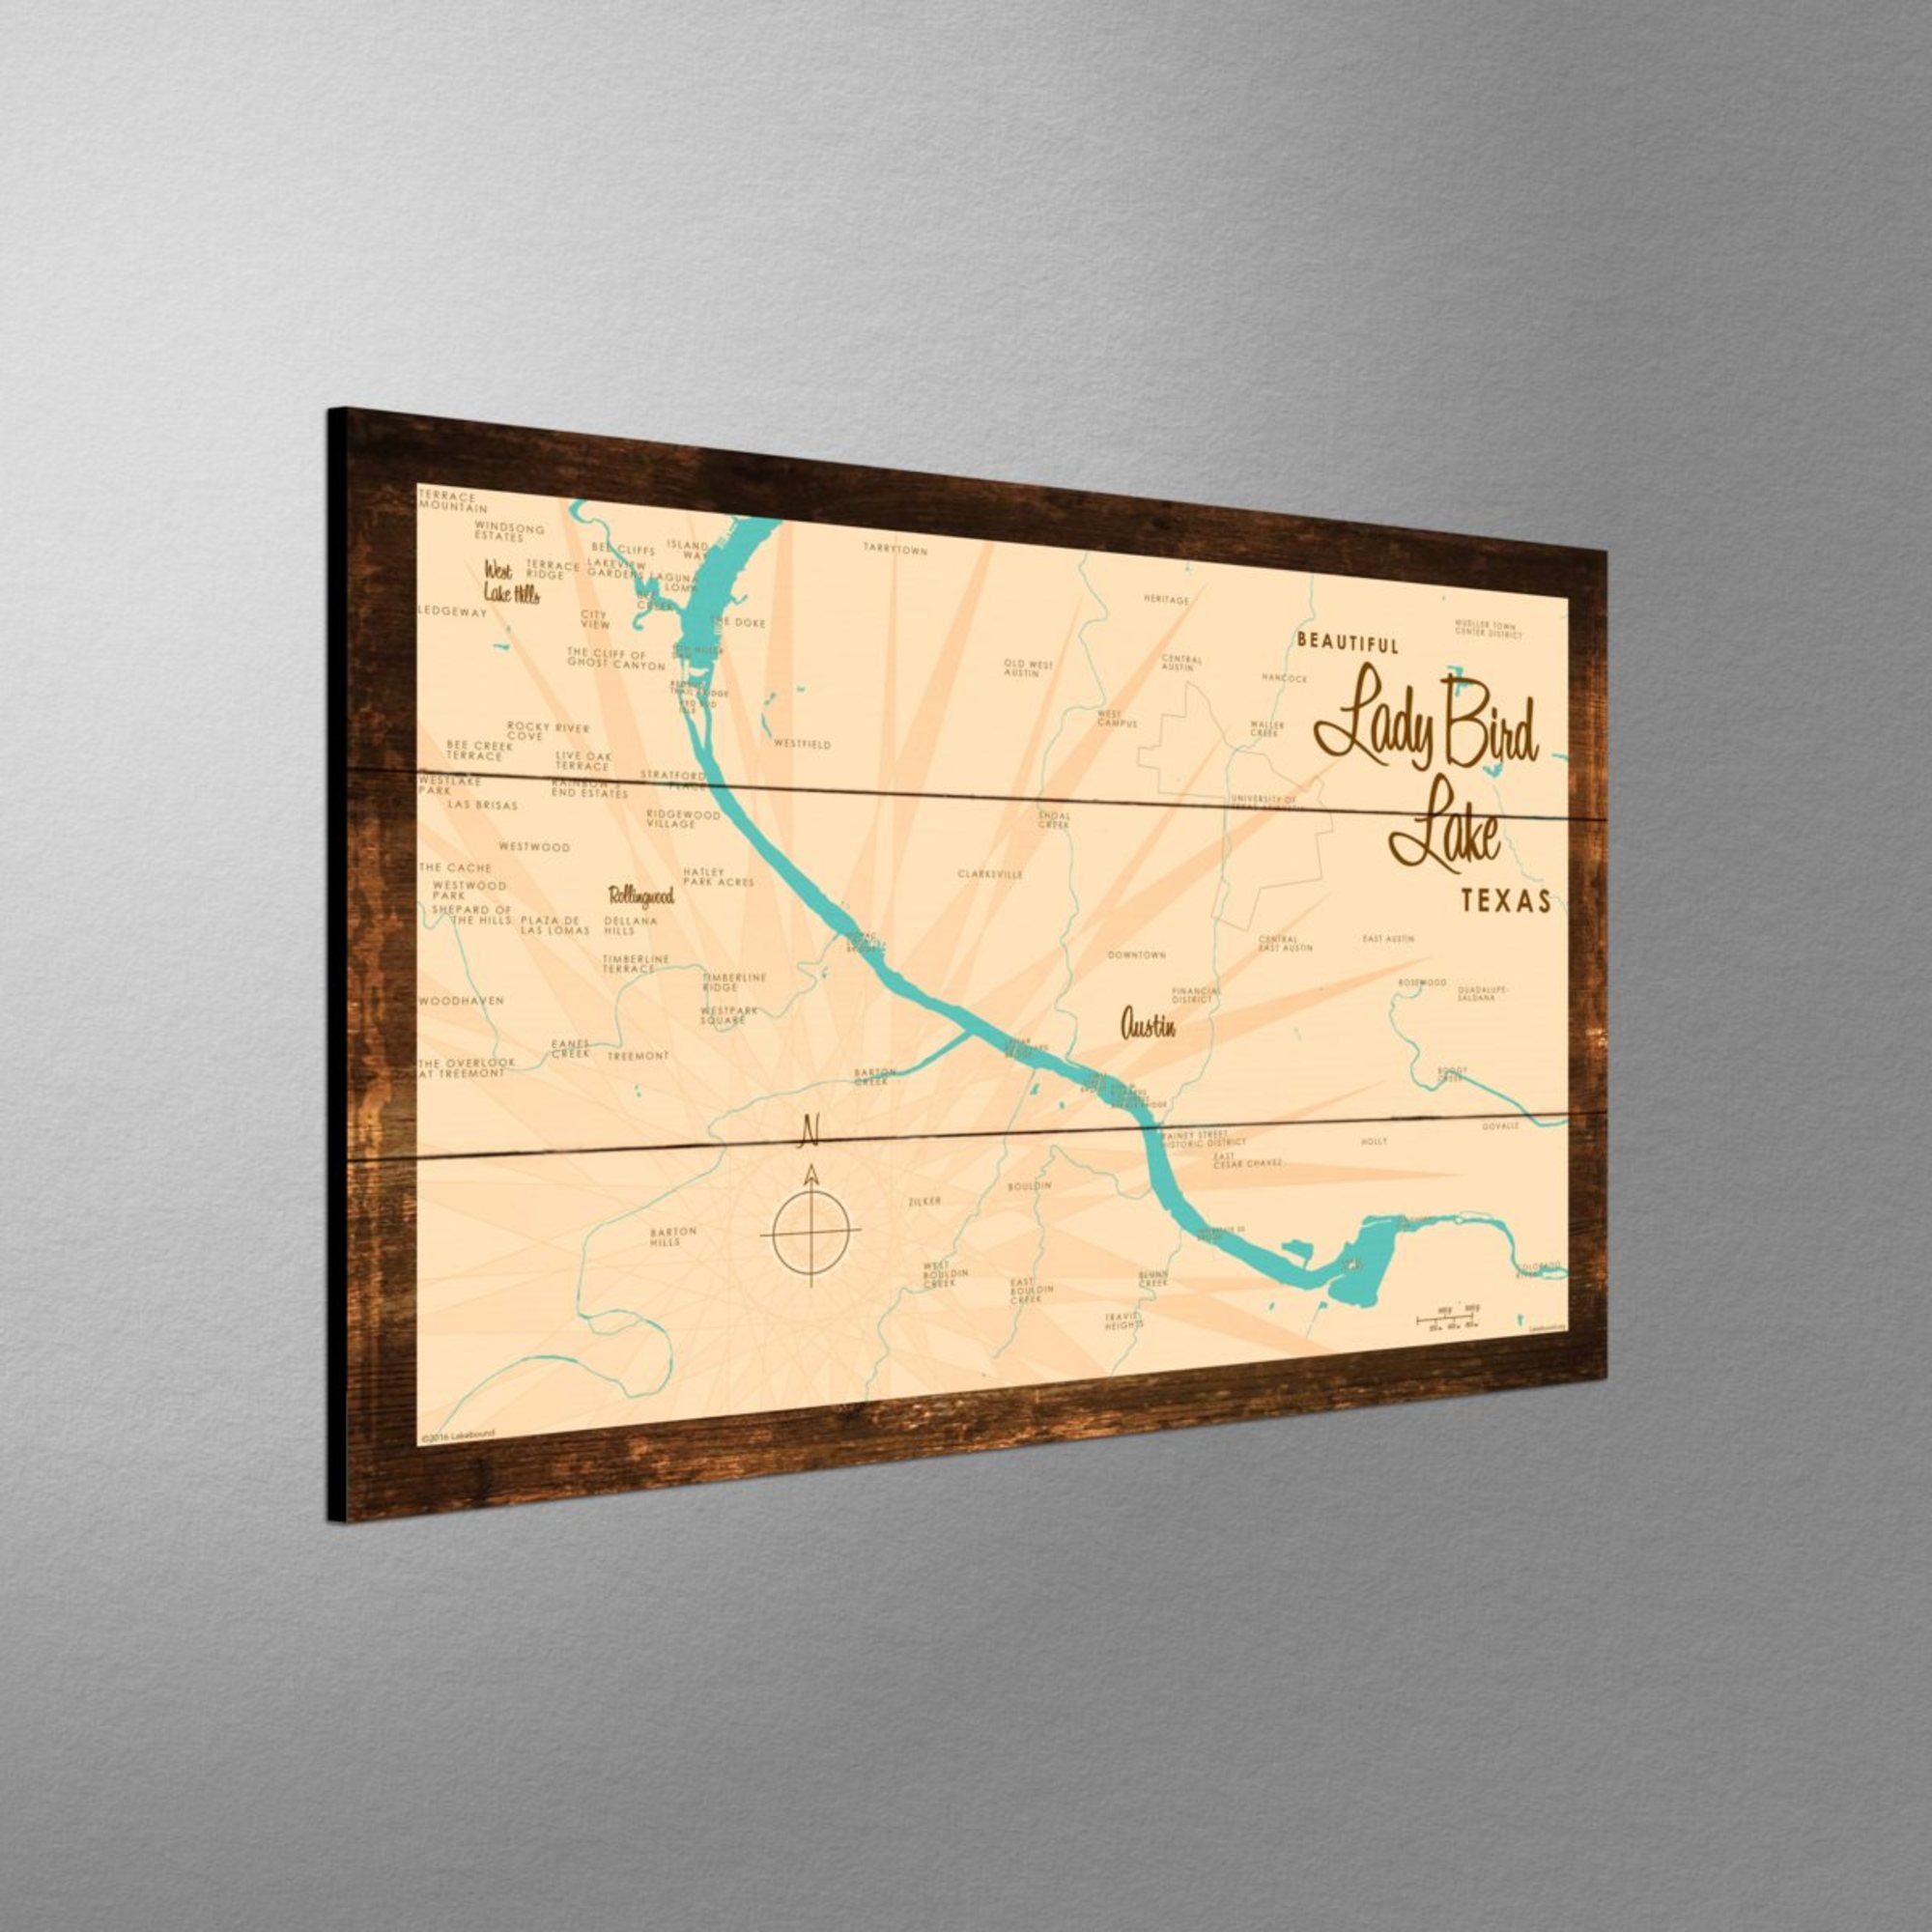 Lady Bird Lake Texas, Rustic Wood Sign Map Art